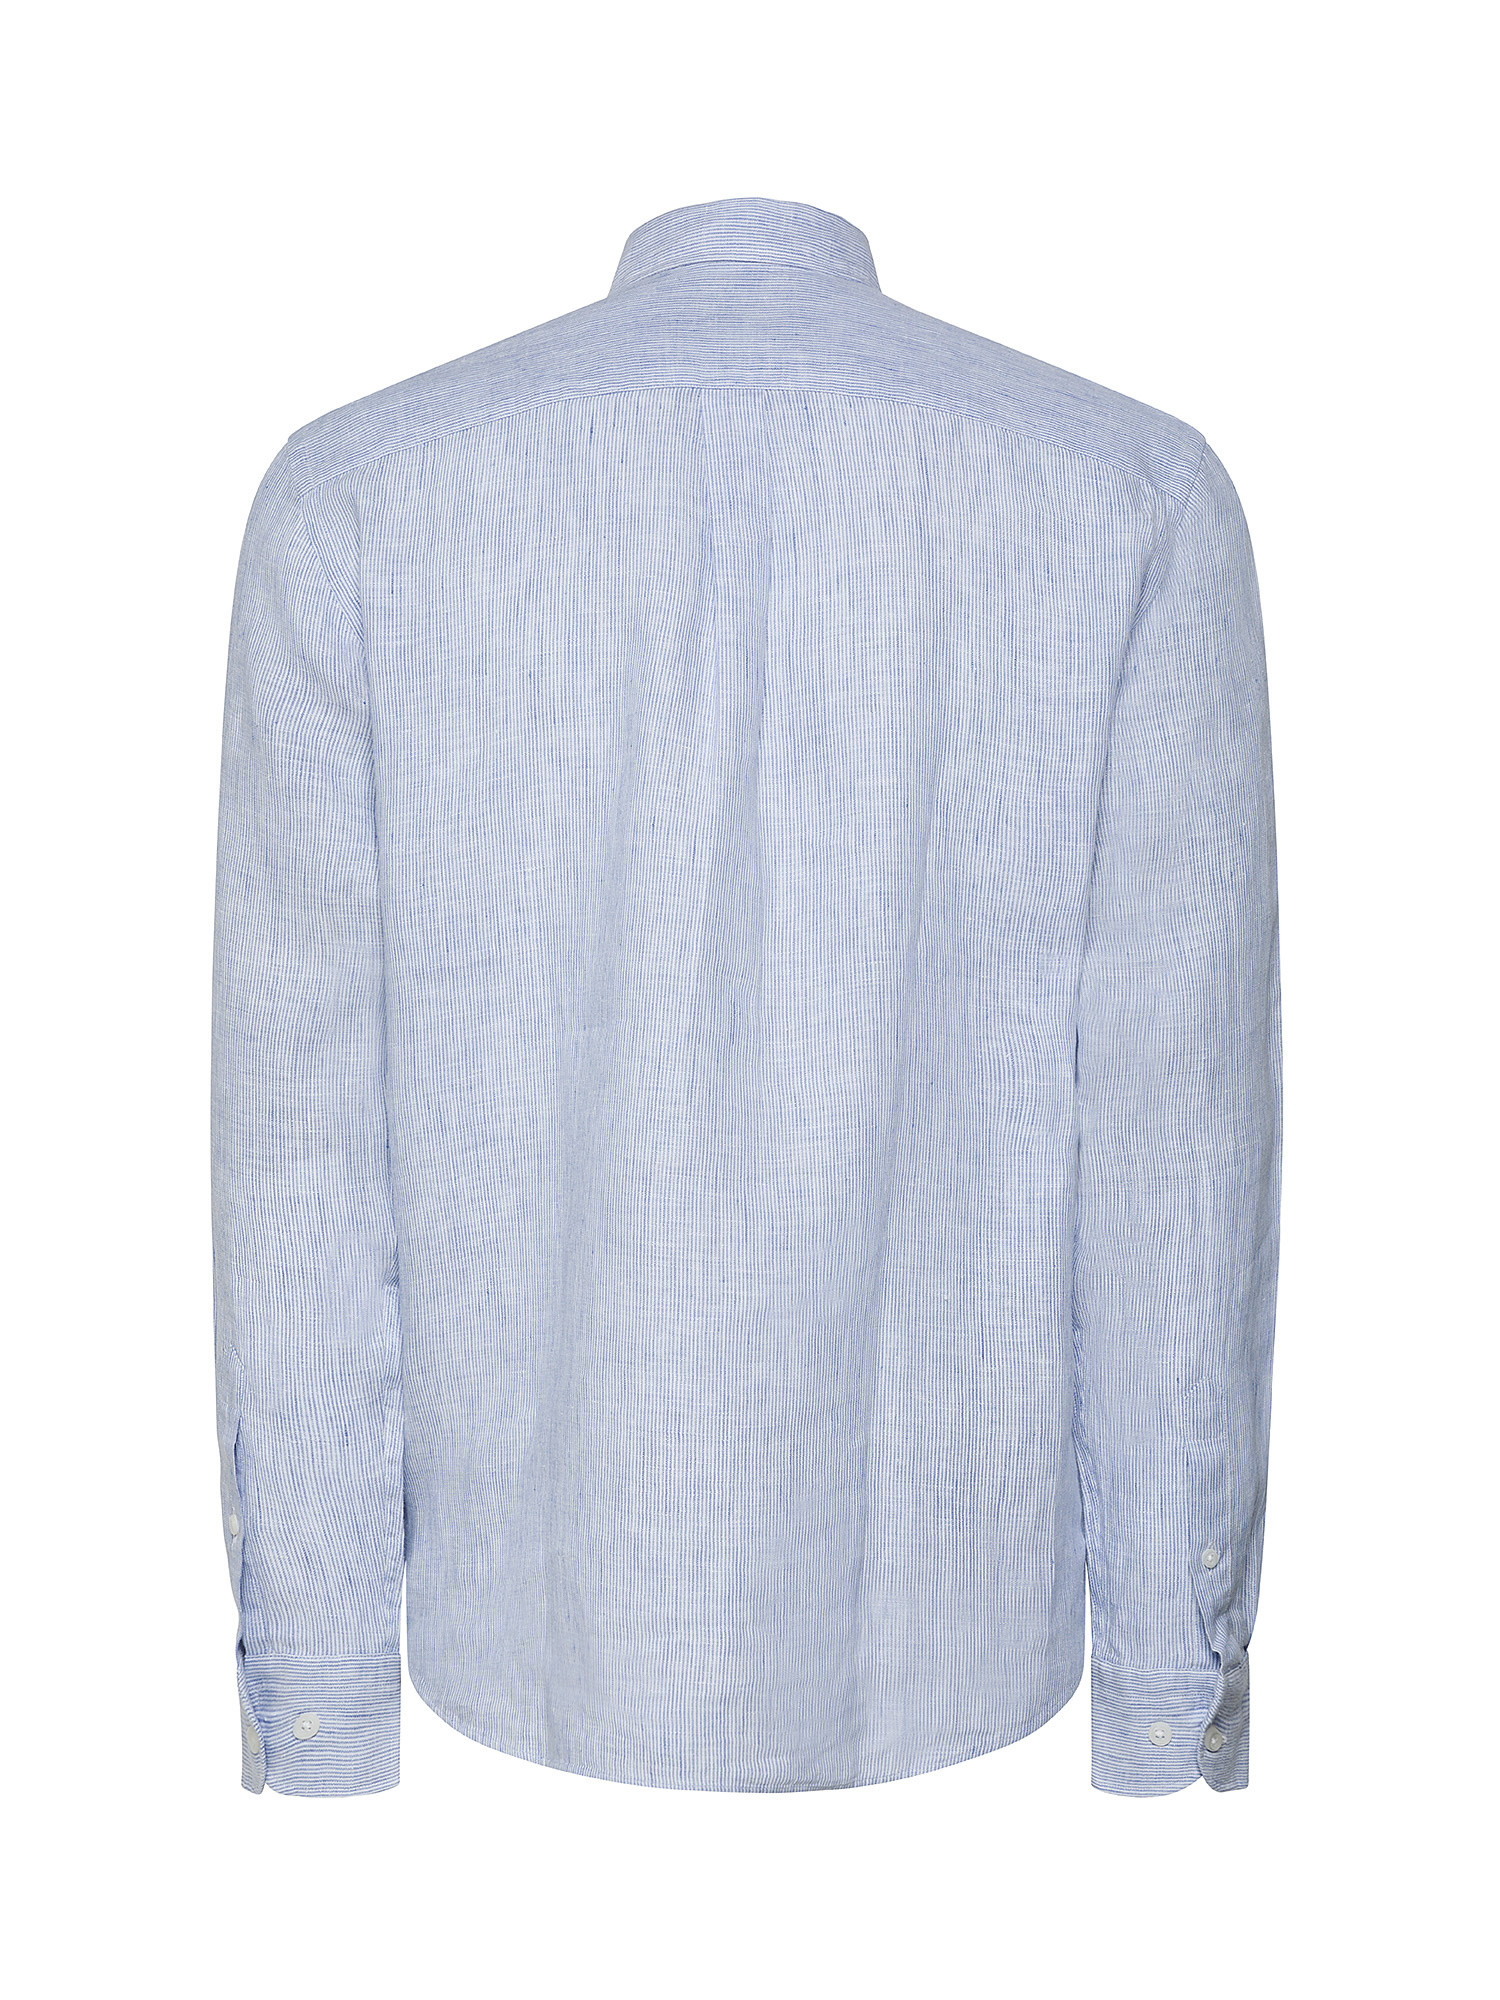 Luca D'Altieri - Tailor fit shirt in pure linen, Blue, large image number 1